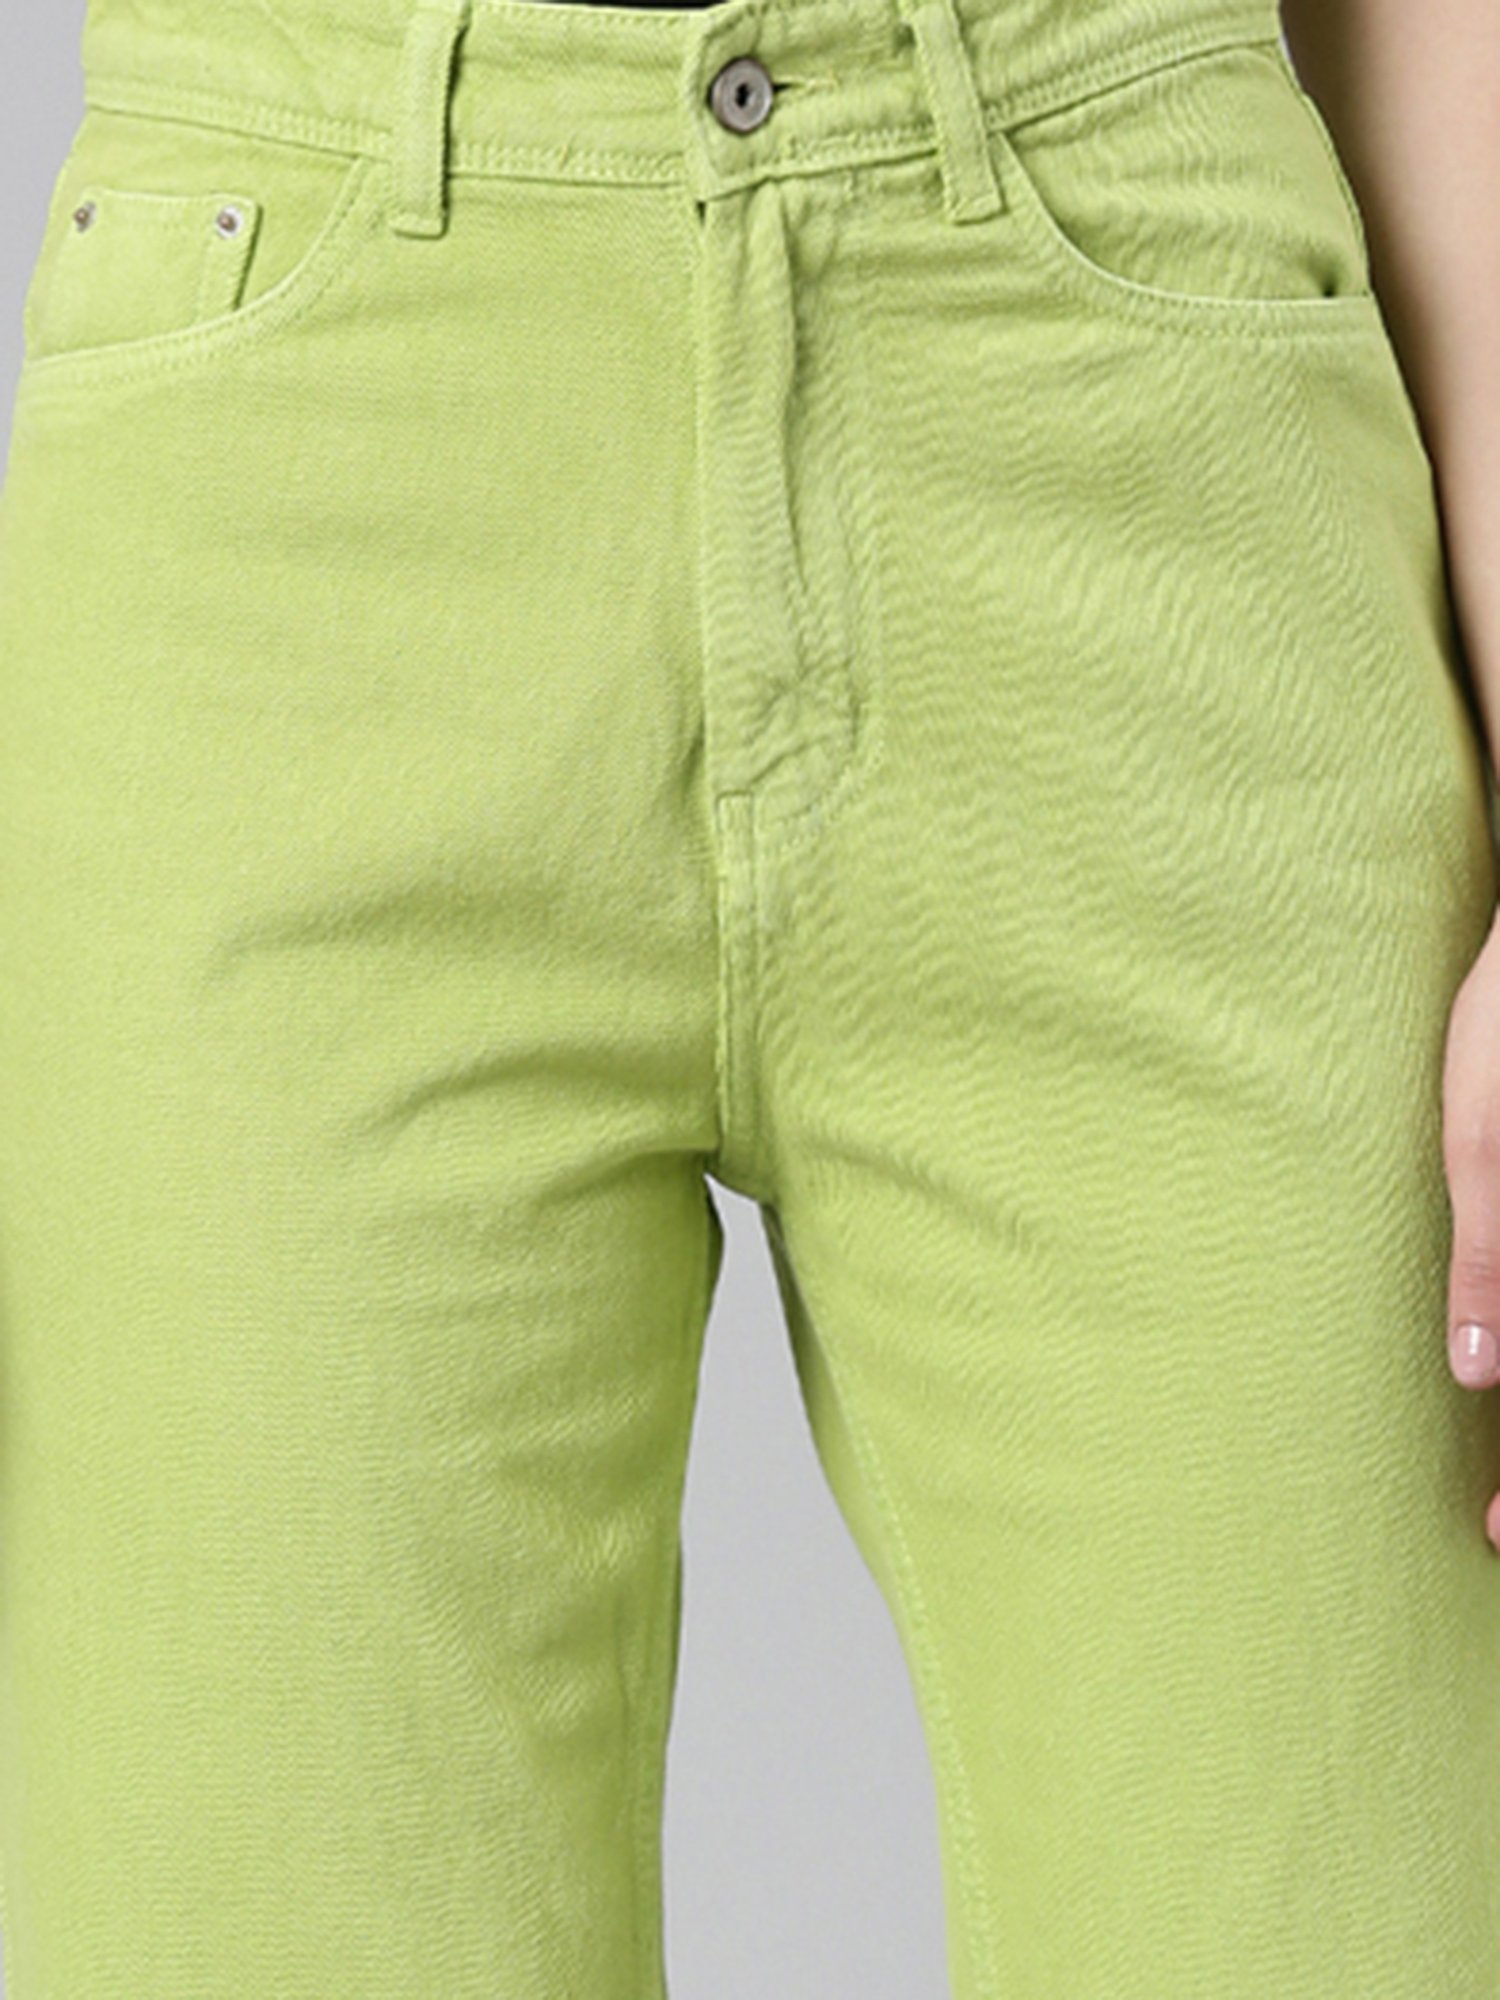 Buy Denim Jeans for Men Online from Hustle N Holla